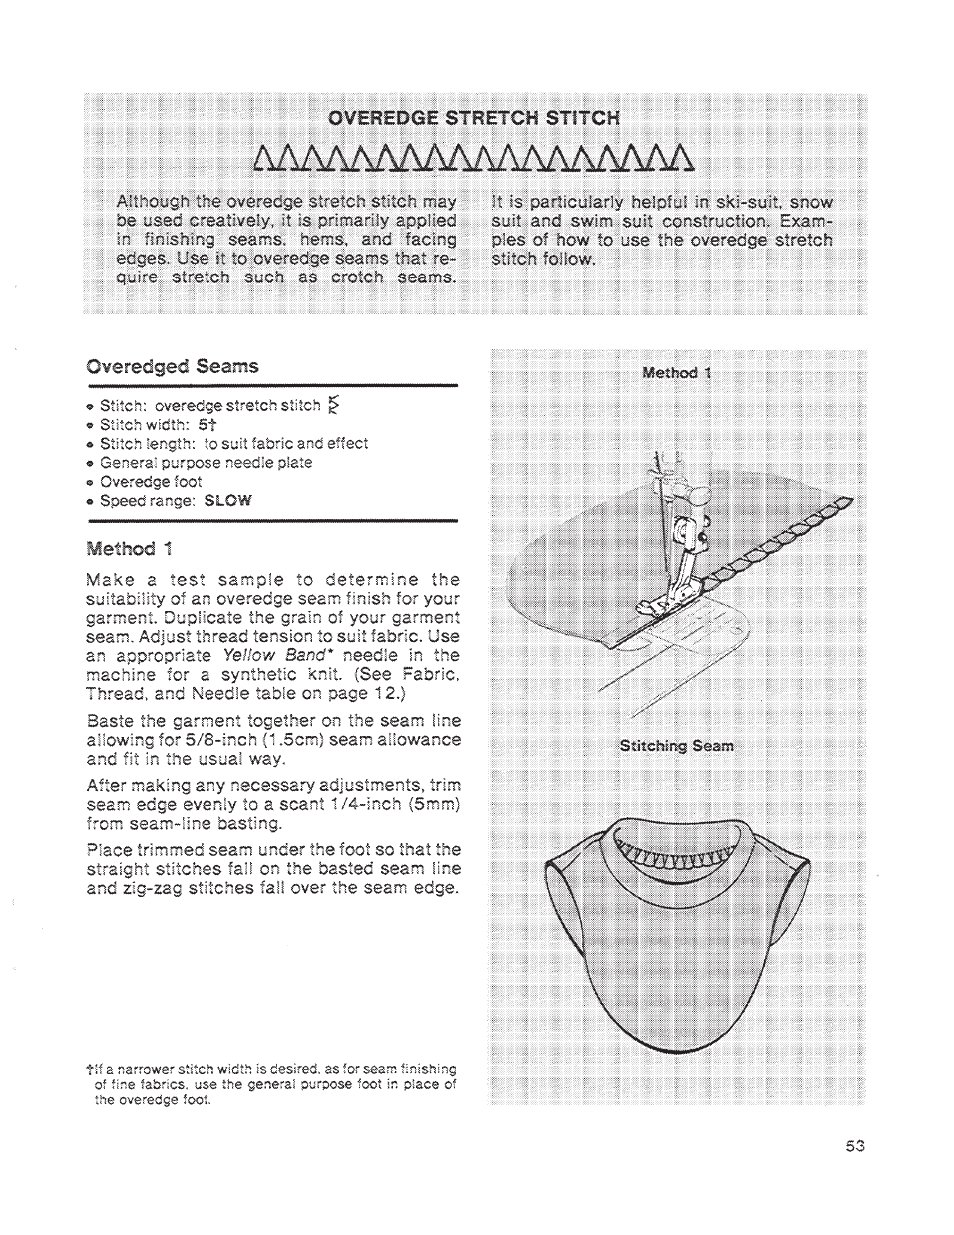 Ovemdqe stretch stitch, I'i": iilii|fl|i|fbirii, Overedged seams | Method 1 | SINGER 1200 Athena User Manual | Page 55 / 90